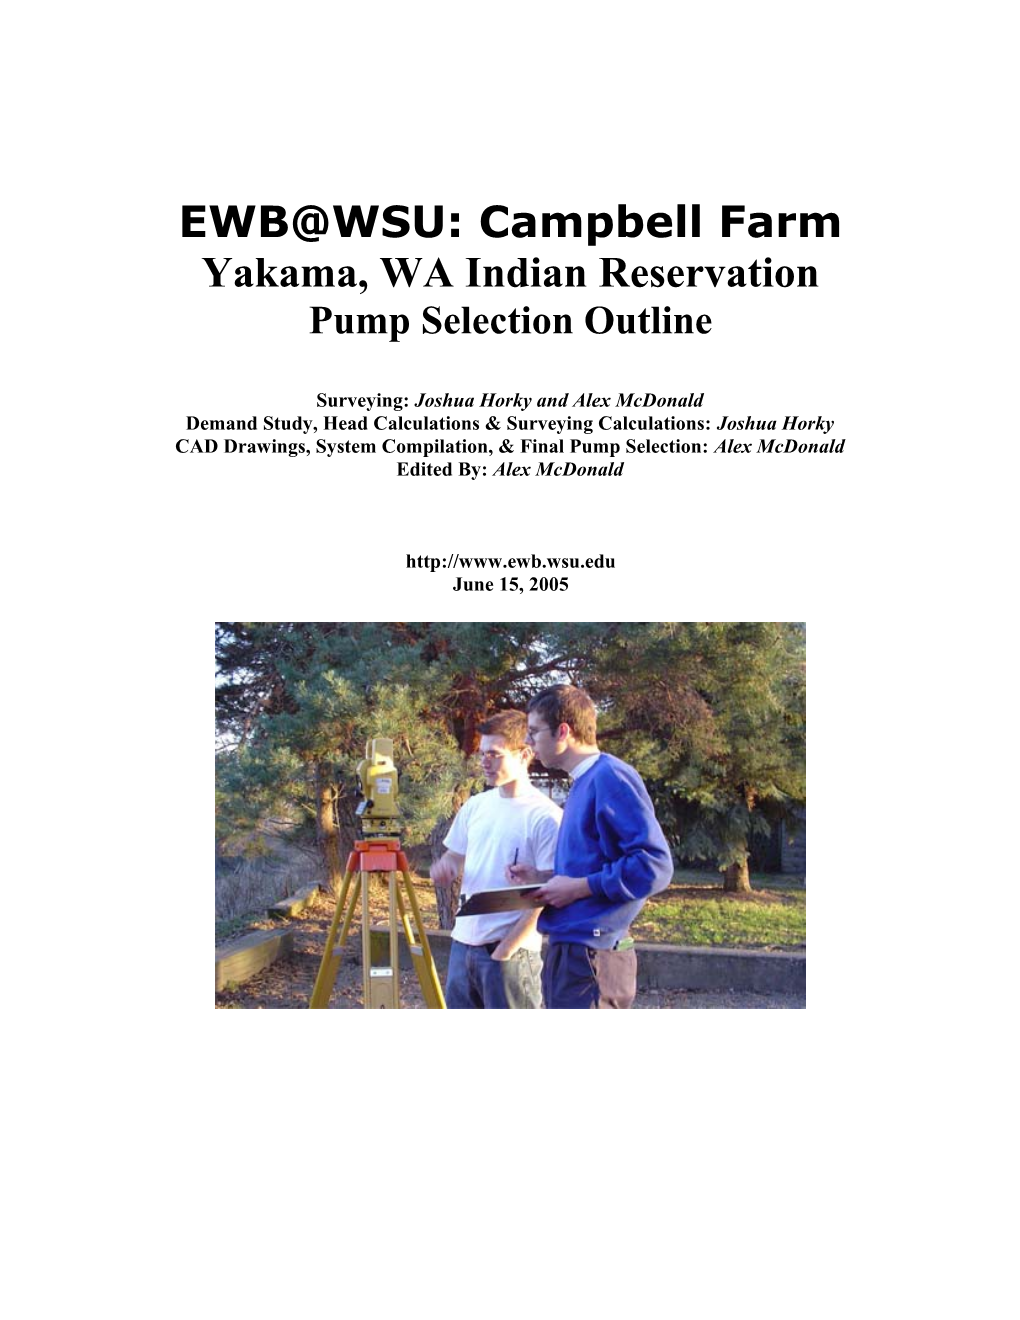 EWB WSU: Campbell Farm Yakama Indian Reservation, WA